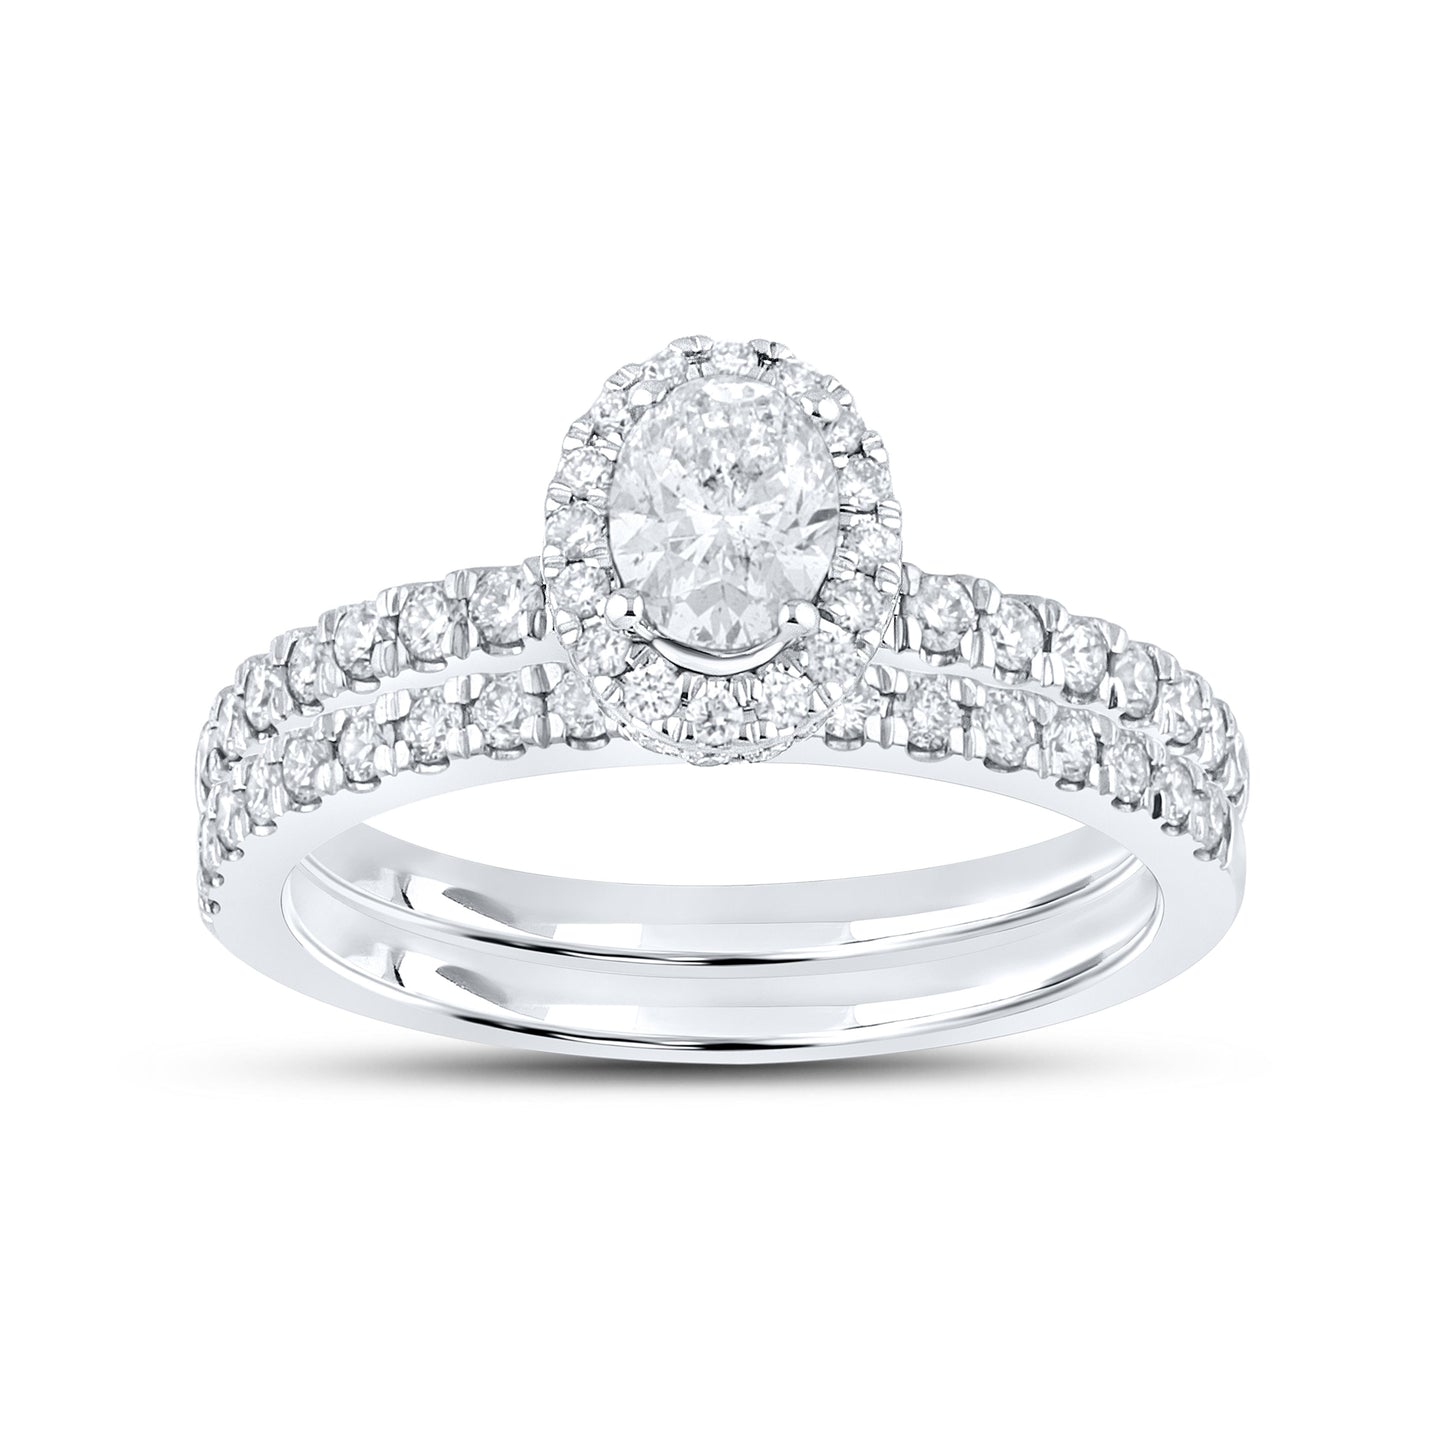 10k White Gold 1.14 CTW OVAL SHAPE Diamond Bridal Ring Set